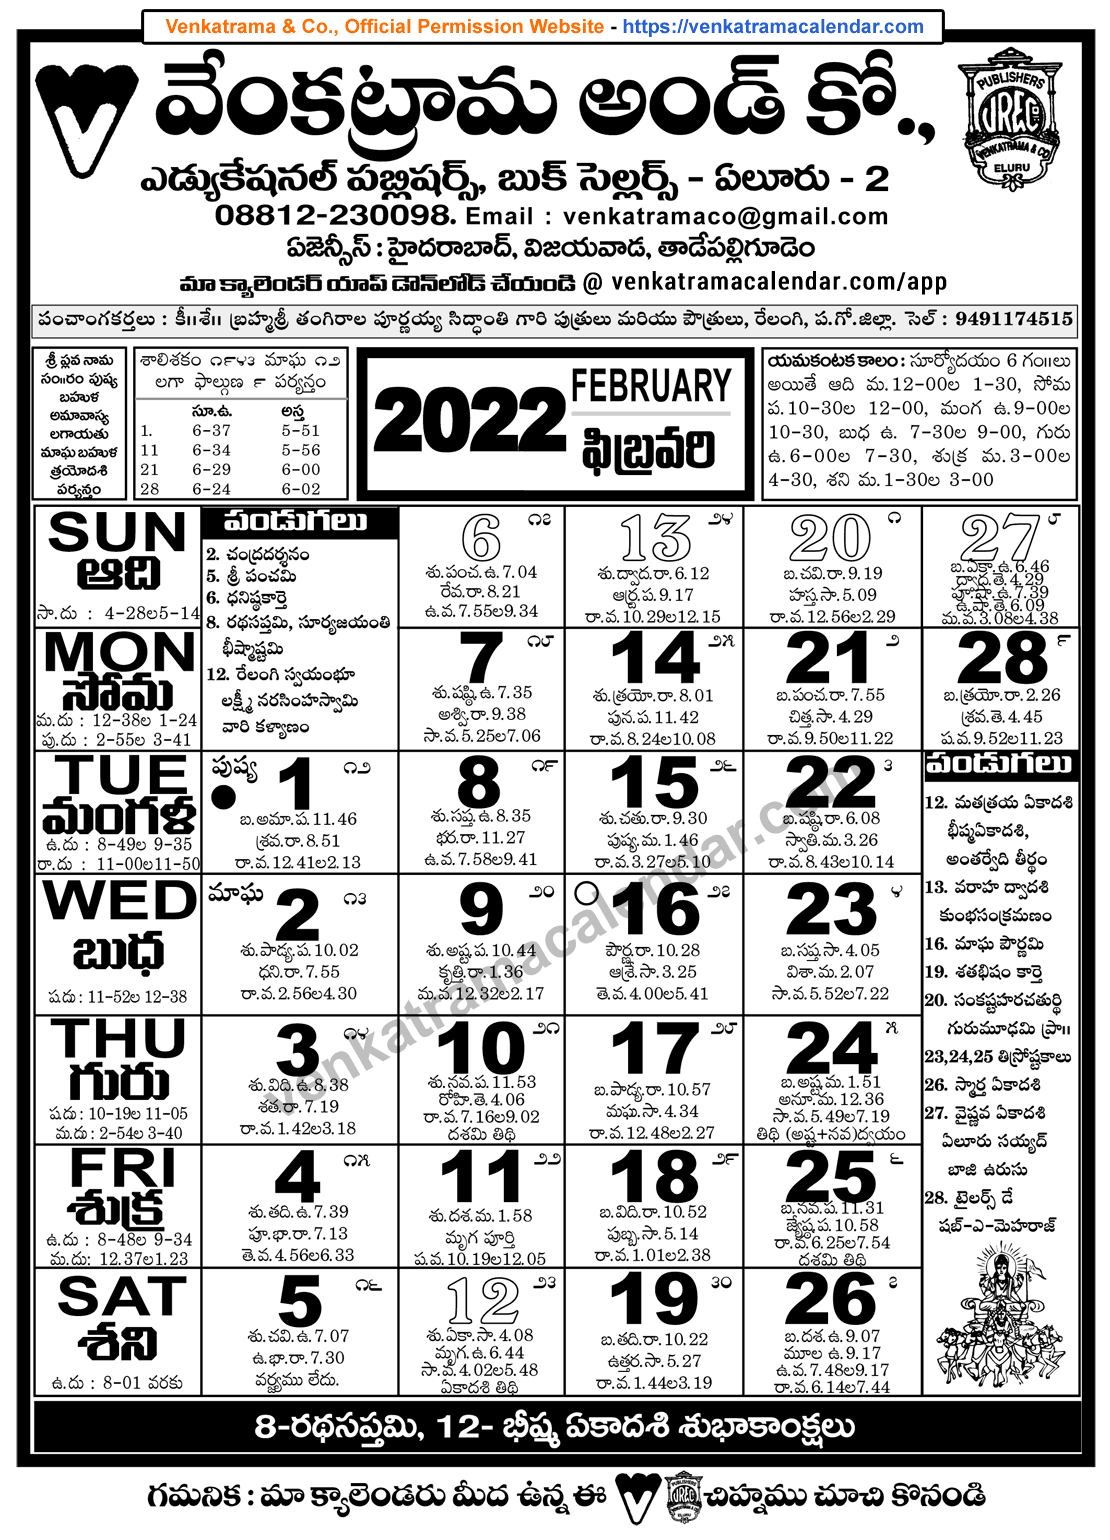 Venkatrama Telugu Calendar 2022 February